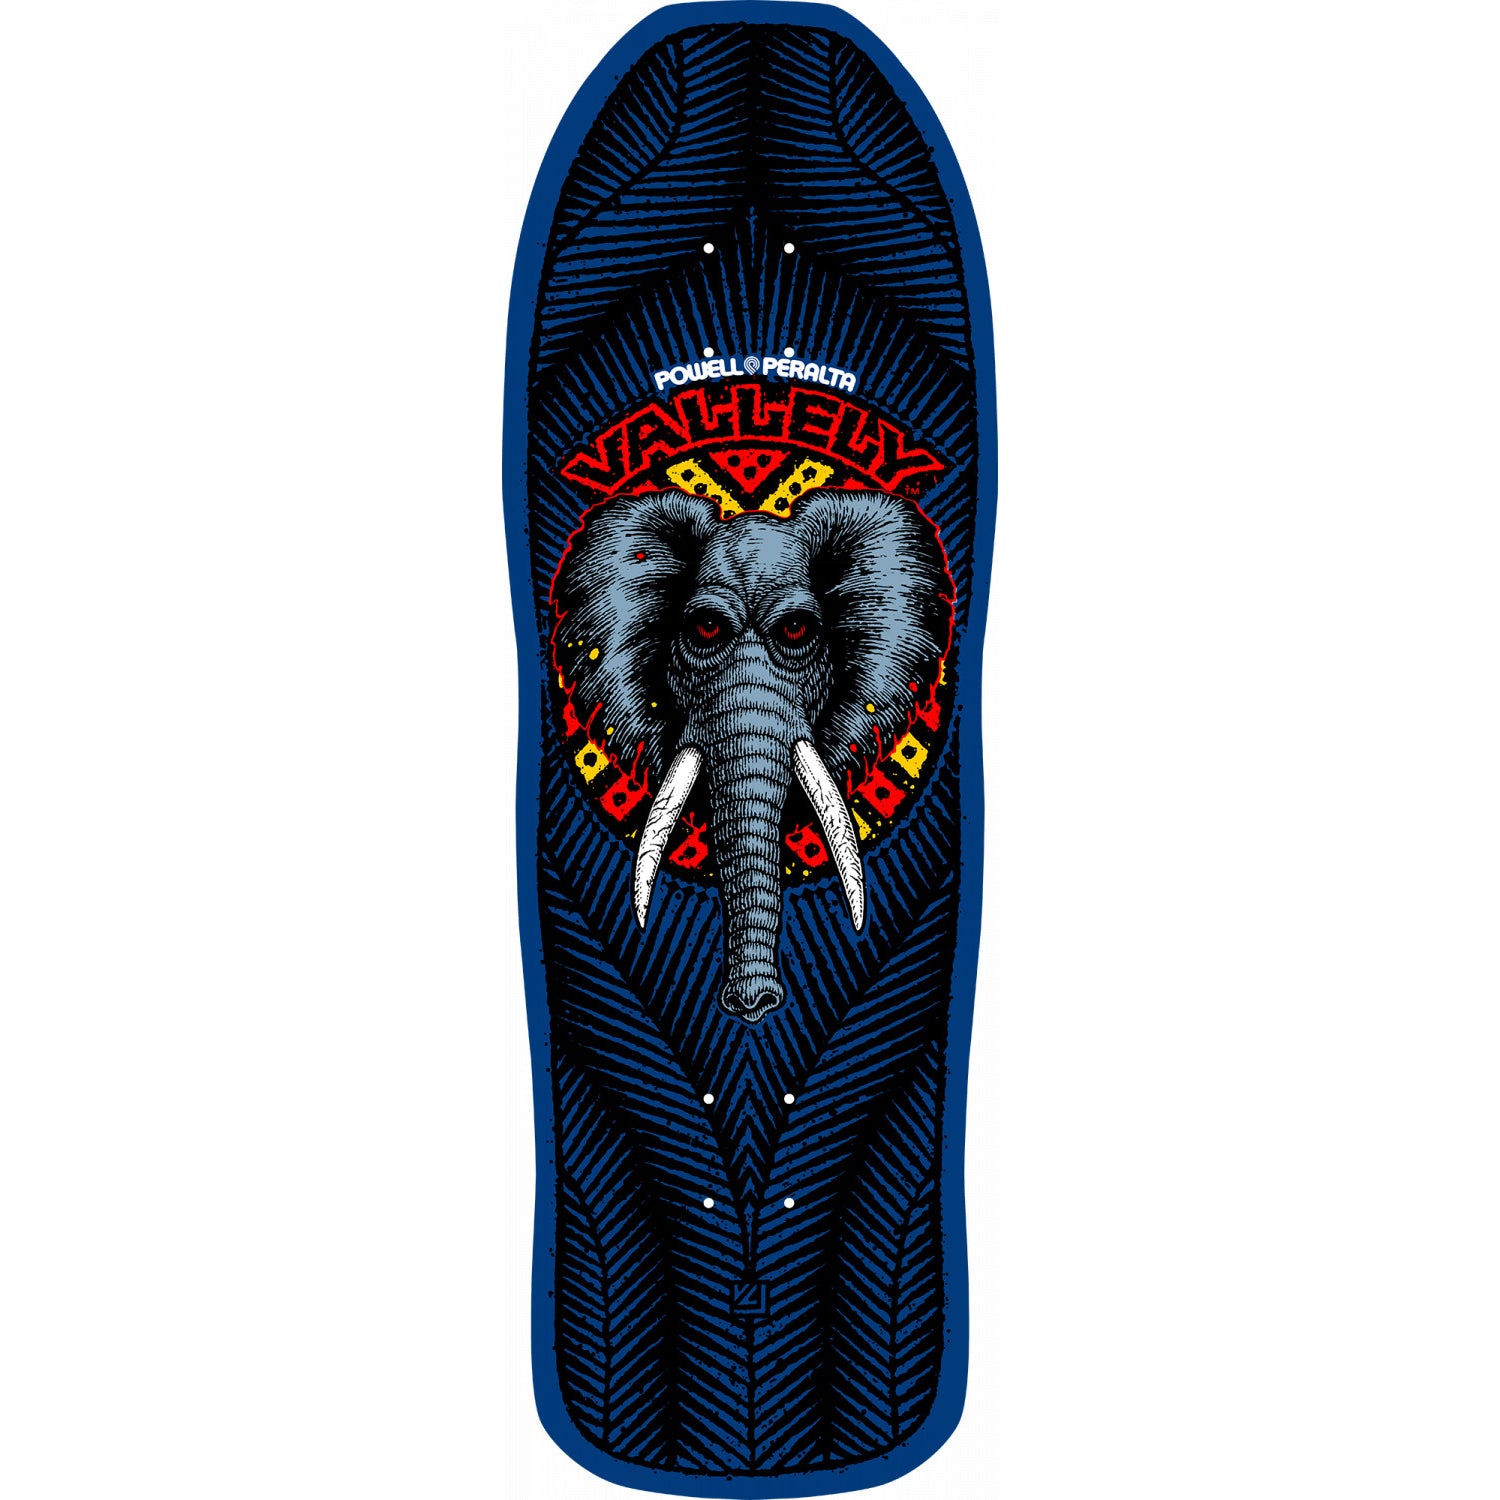 10" Navy Mike Vallely Elephant Powell Peralta Skateboard Deck